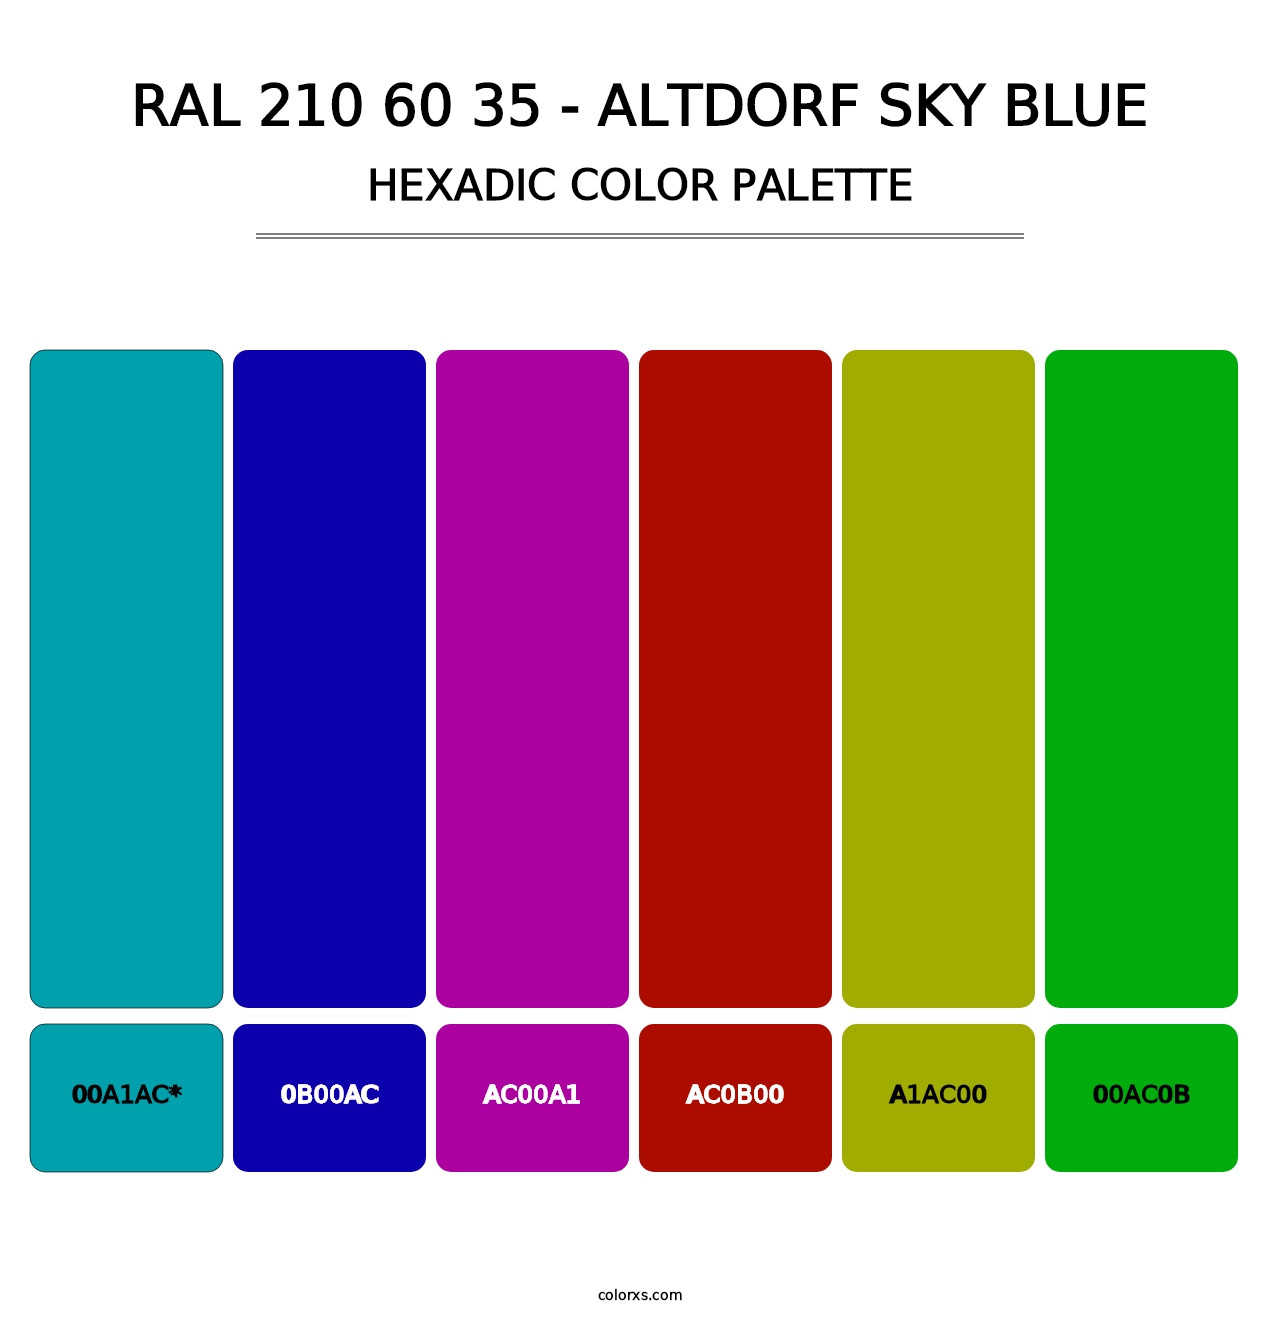 RAL 210 60 35 - Altdorf Sky Blue - Hexadic Color Palette